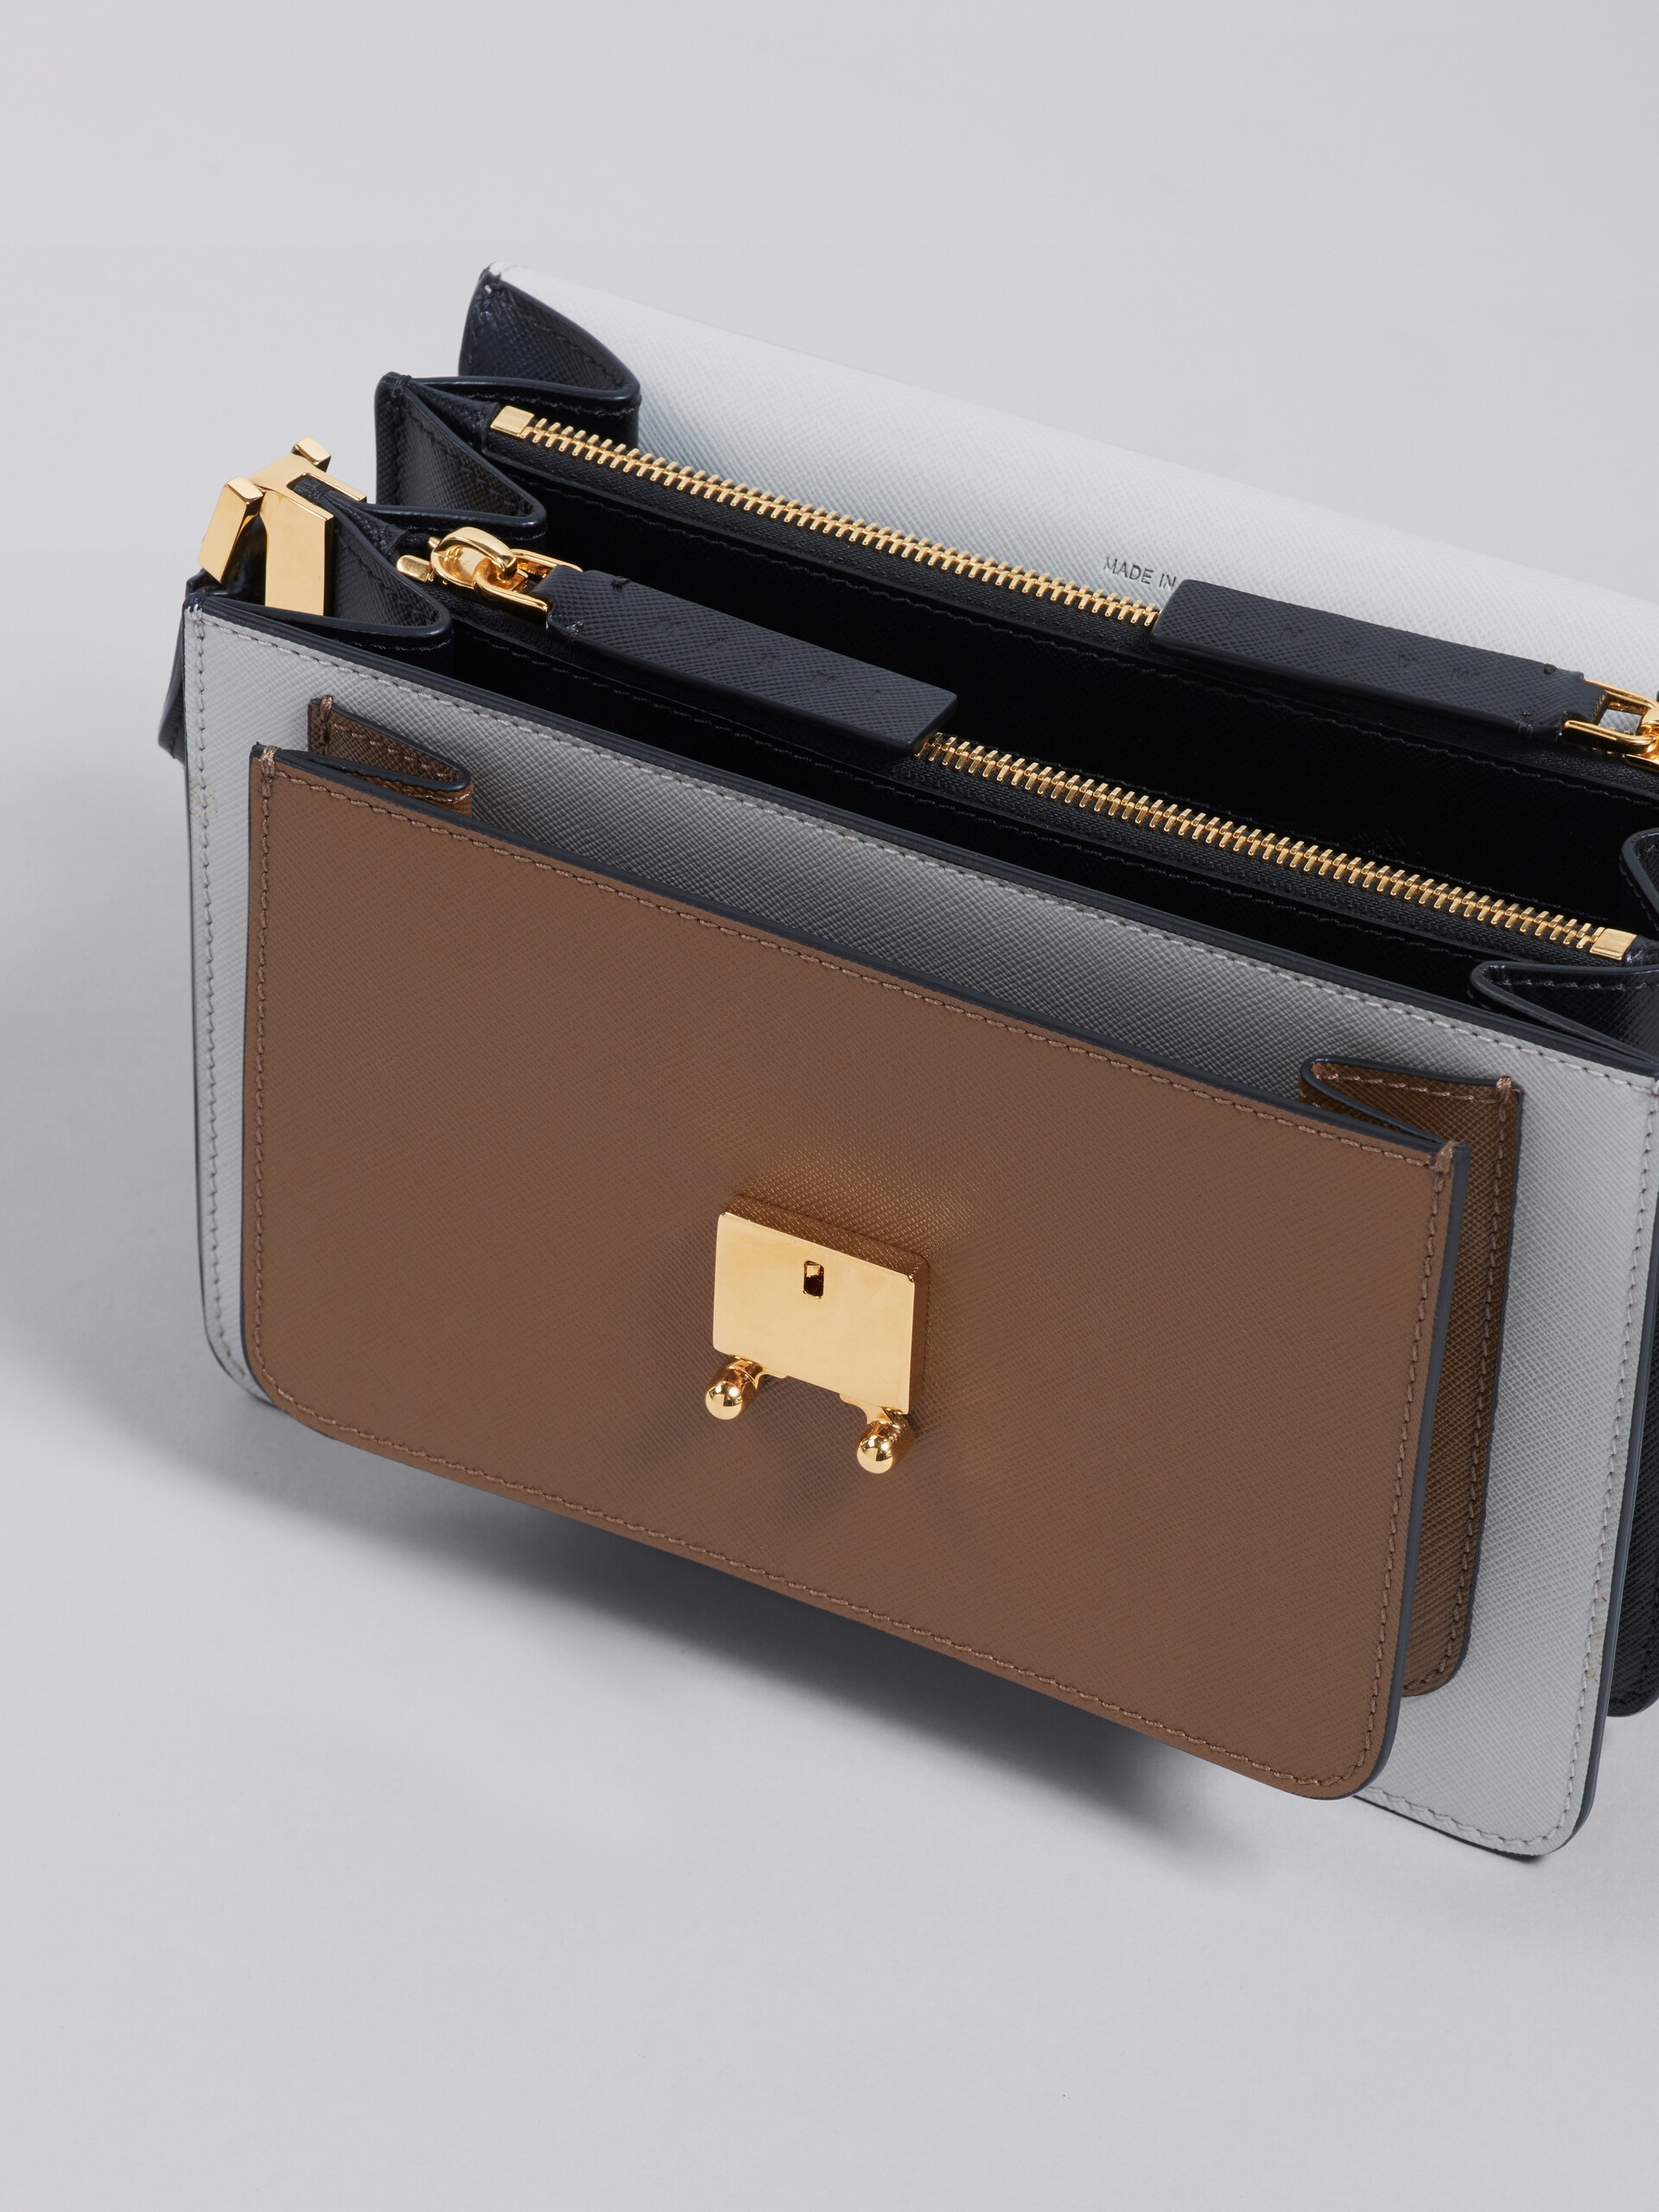 TRUNK medium bag in grey brown and black saffiano leather - Shoulder Bag - Image 3